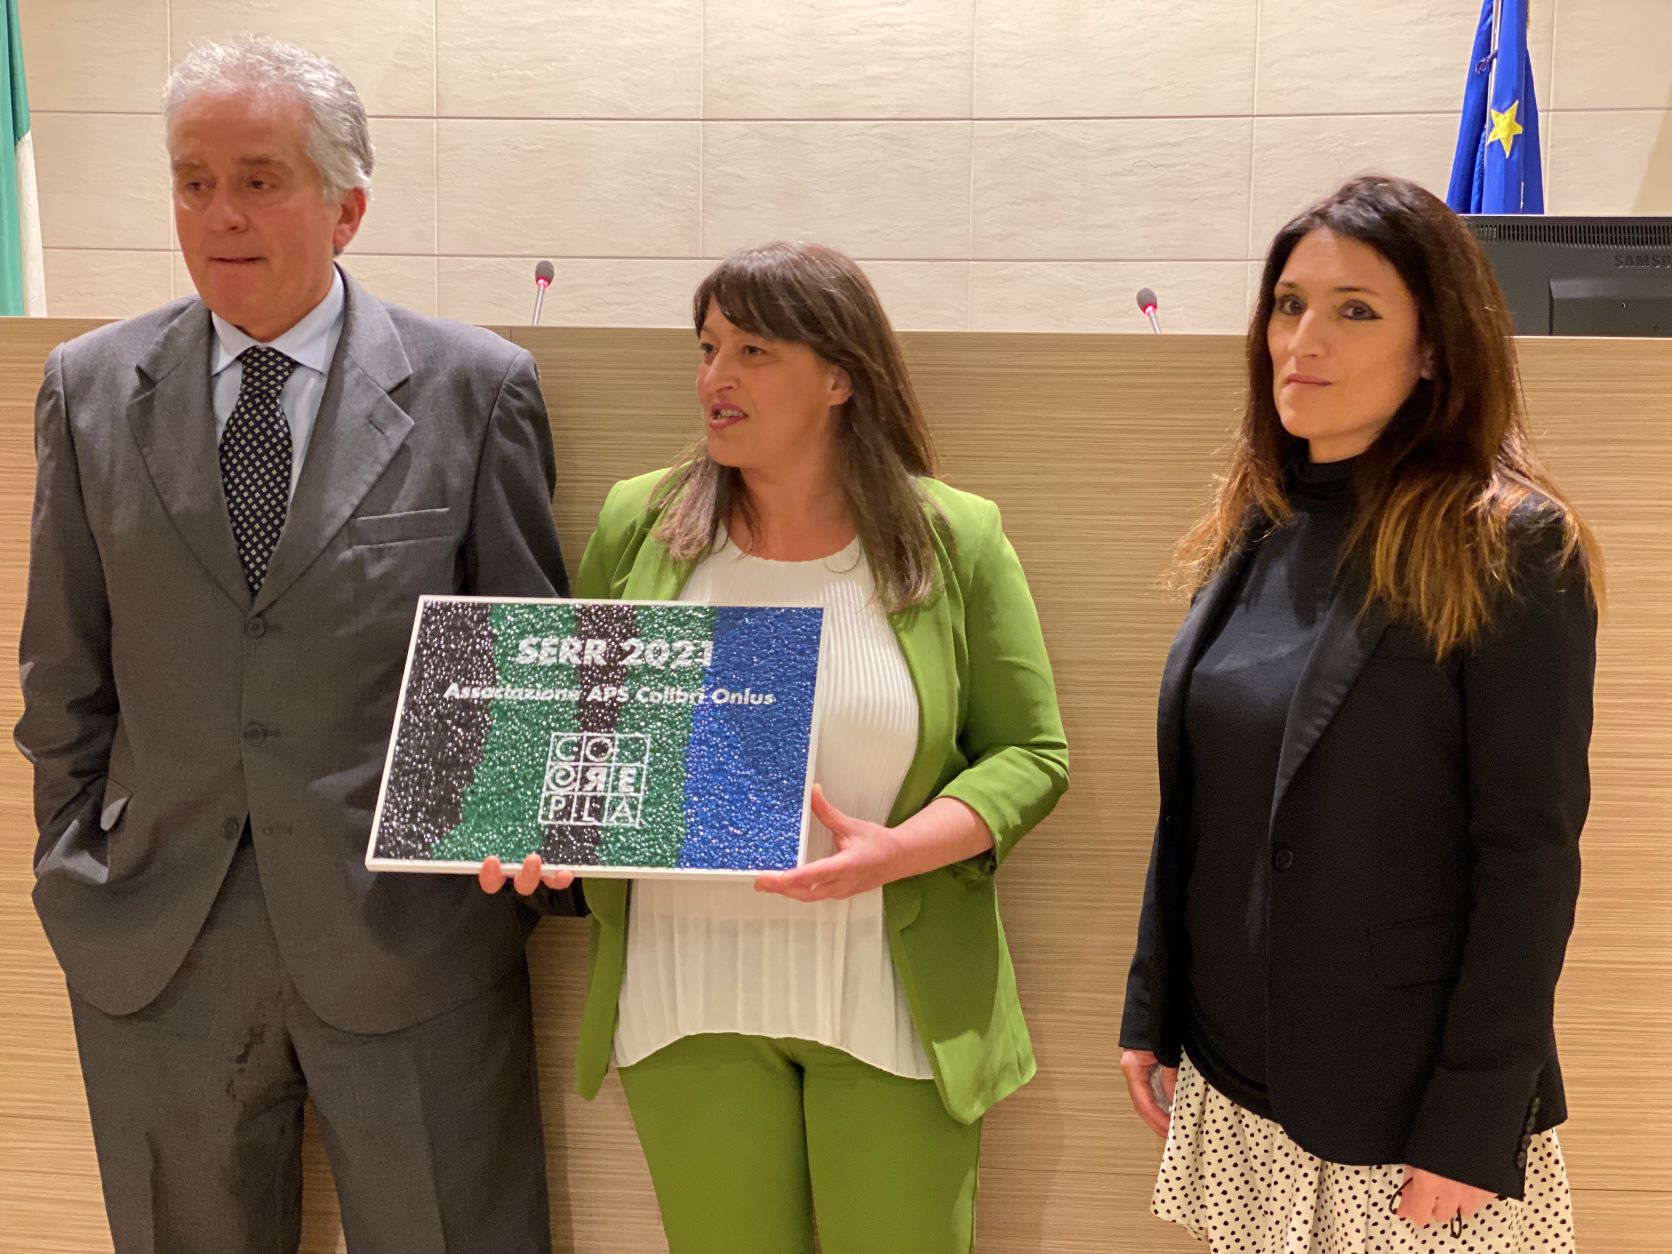 Eleonora Brionne (Corepla) premia l'APS Colibrì Onlus